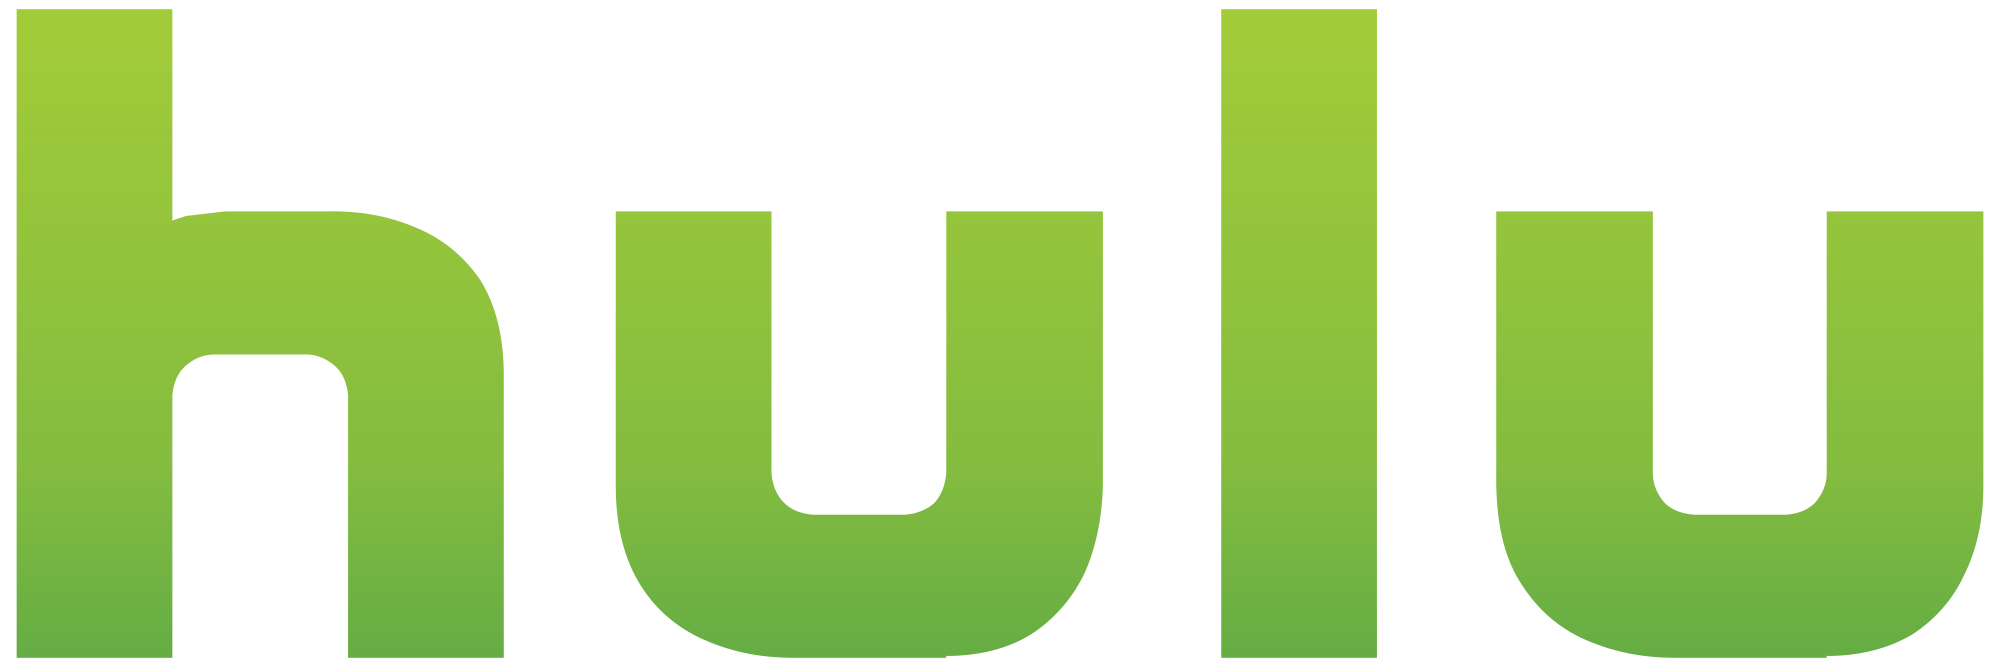 Hulu- data center strategy client